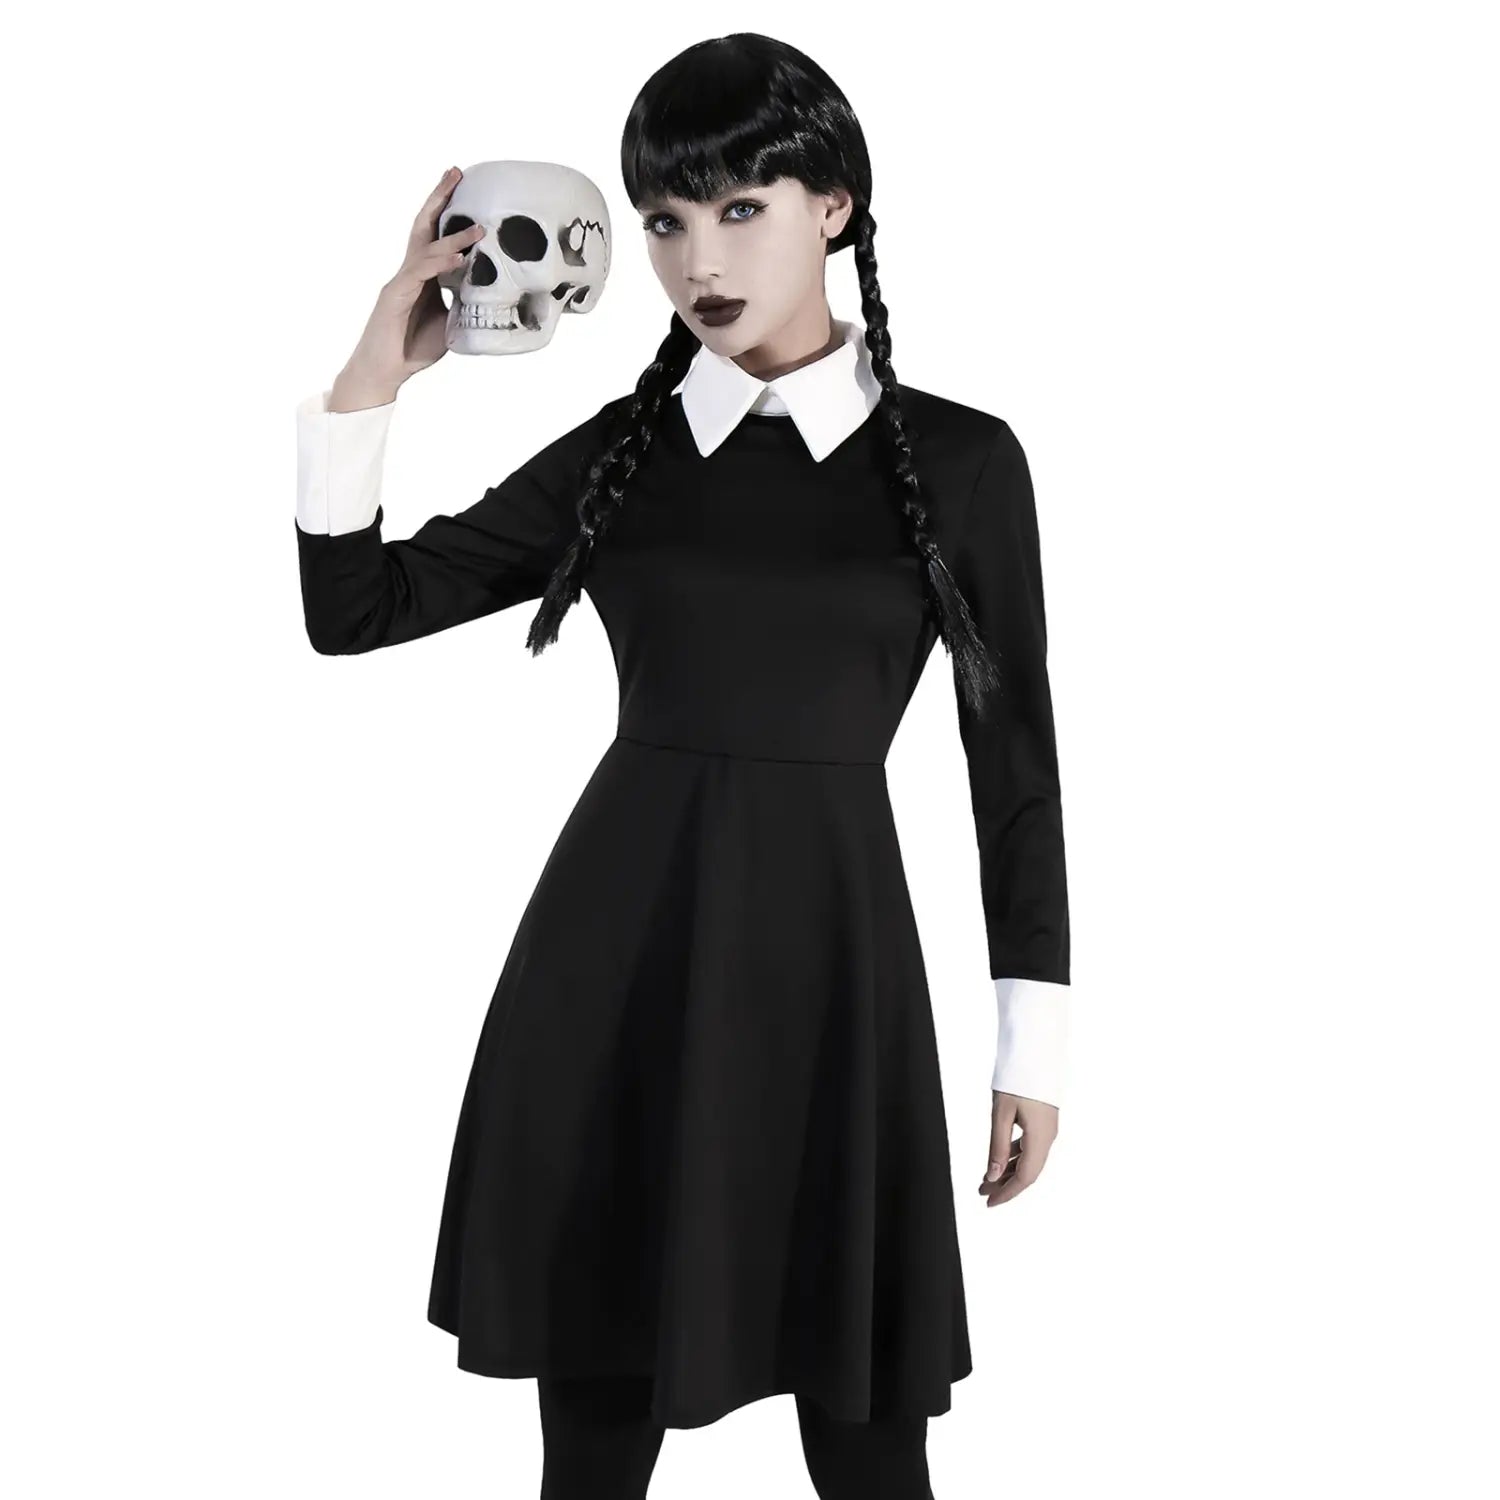 Lovemi - Women’s Dark Retro Dress Halloween